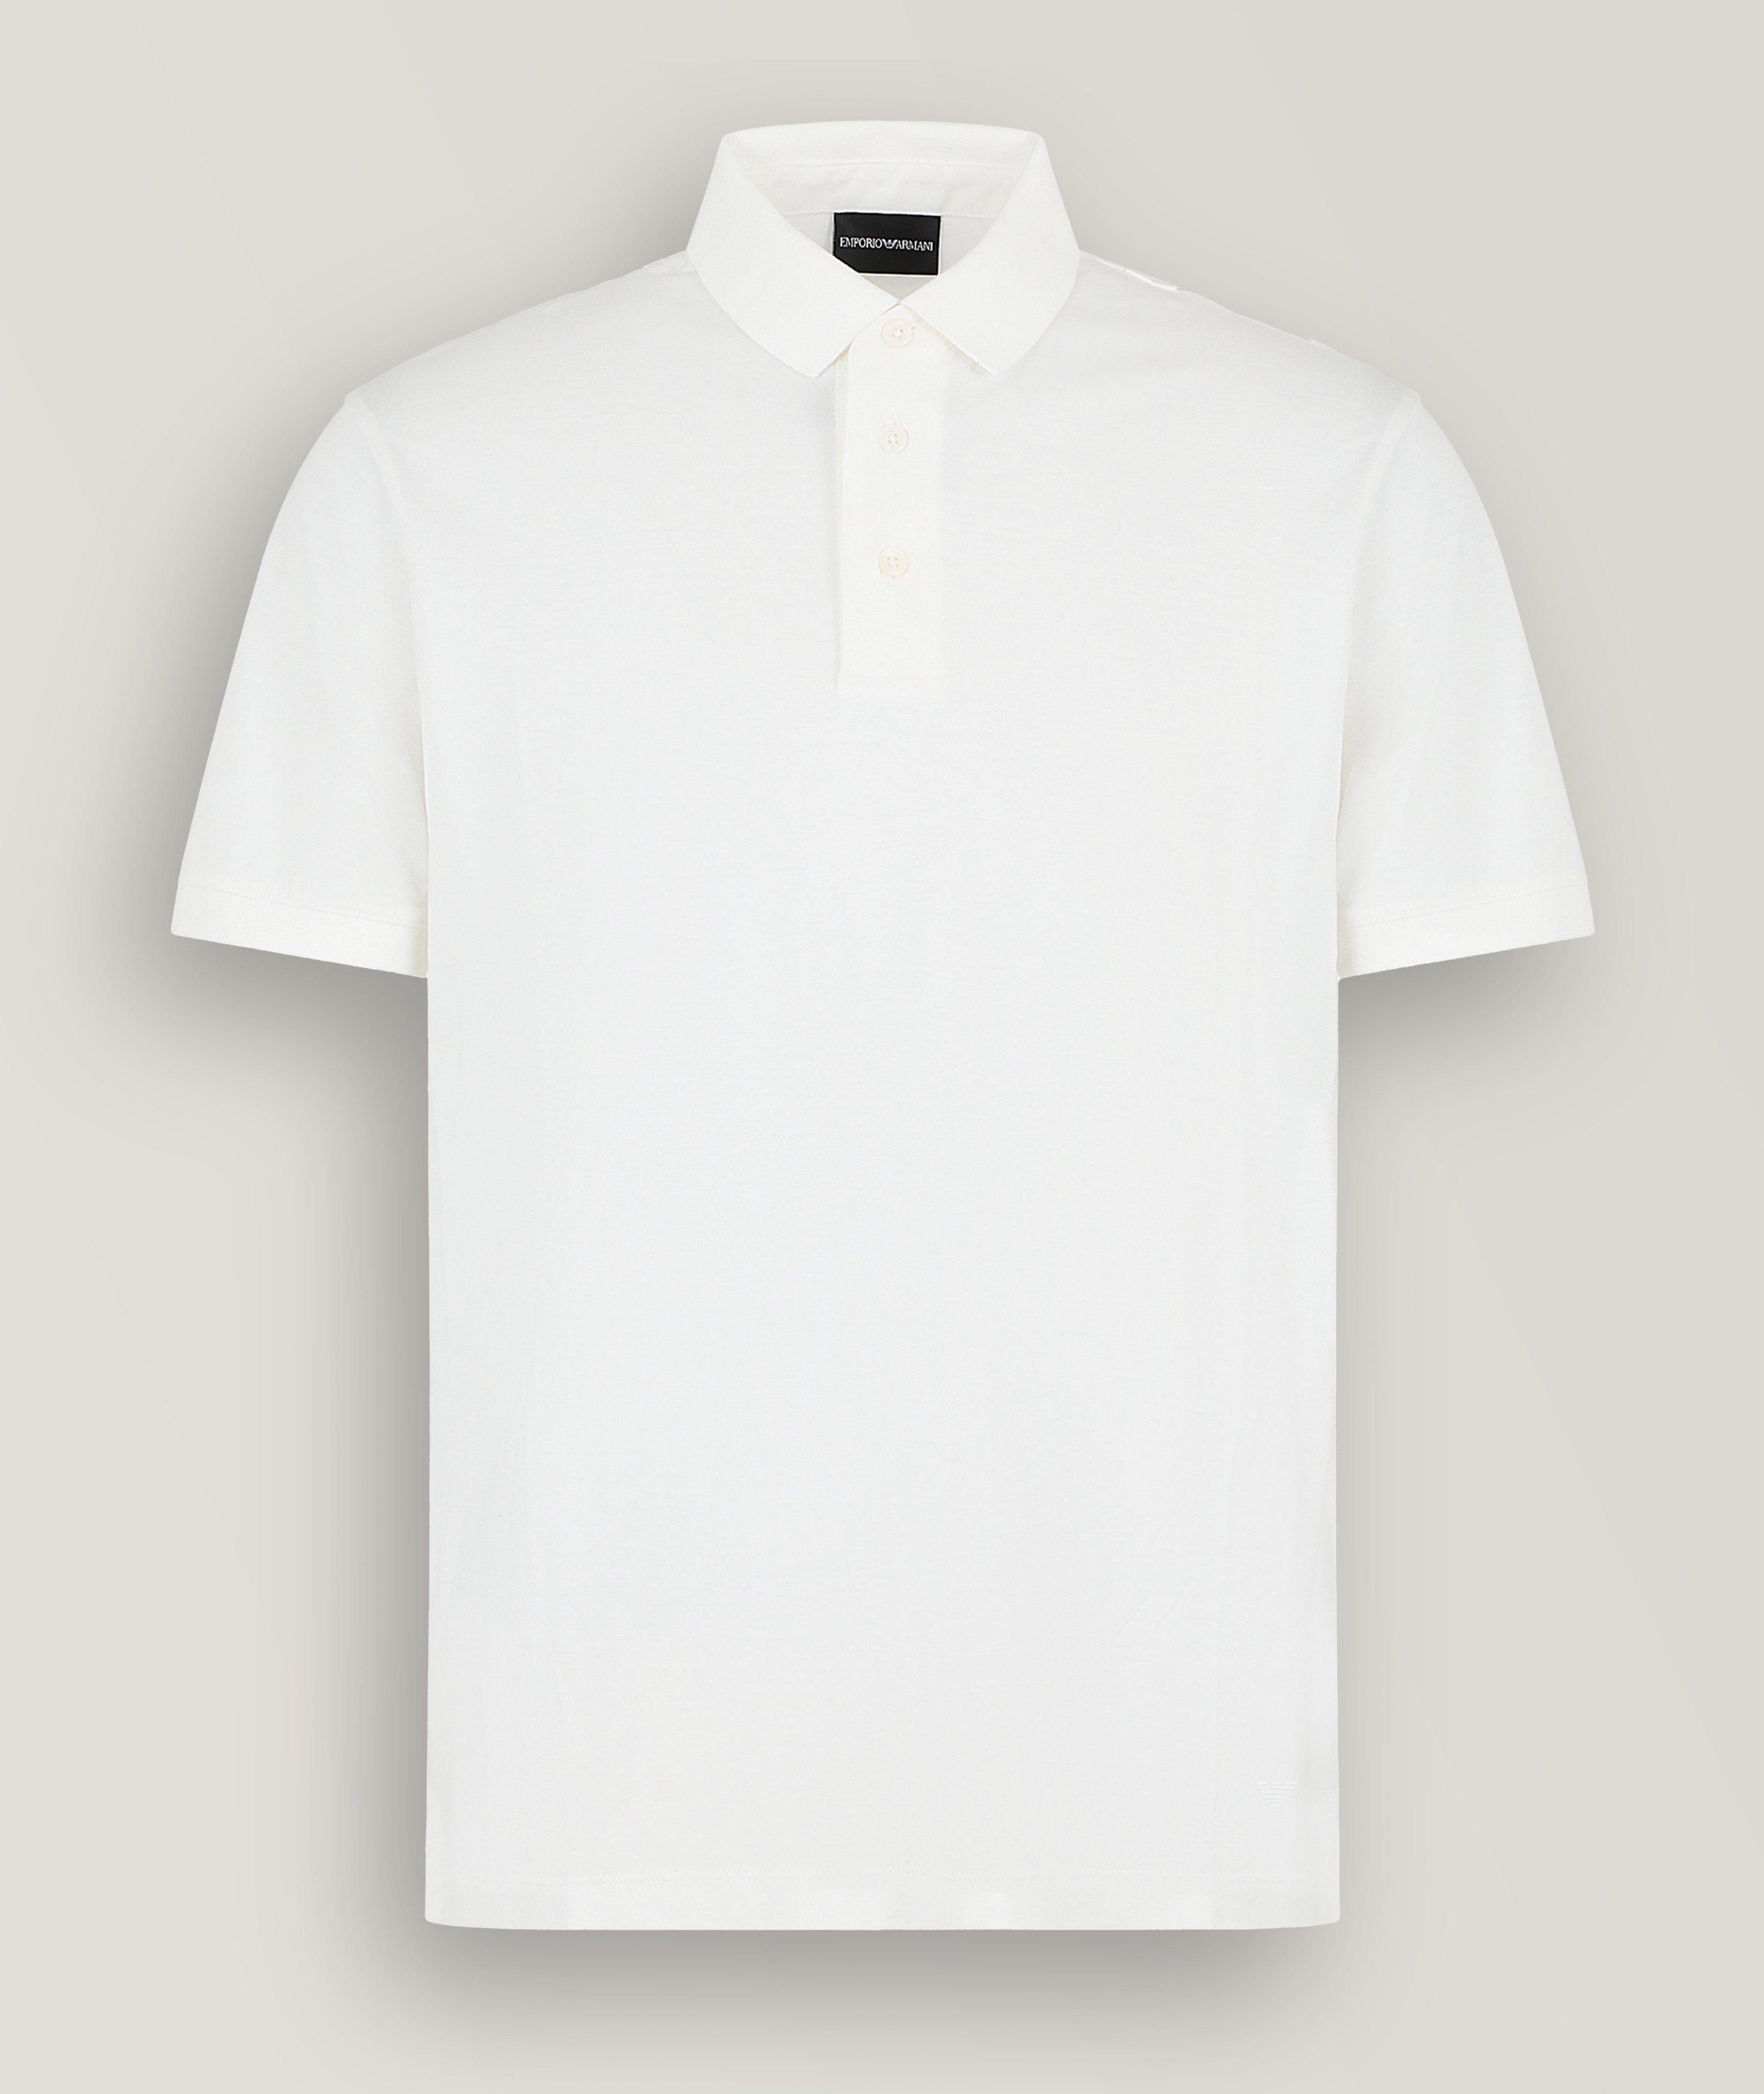 Mercerised Piqué Cotton Polo image 0